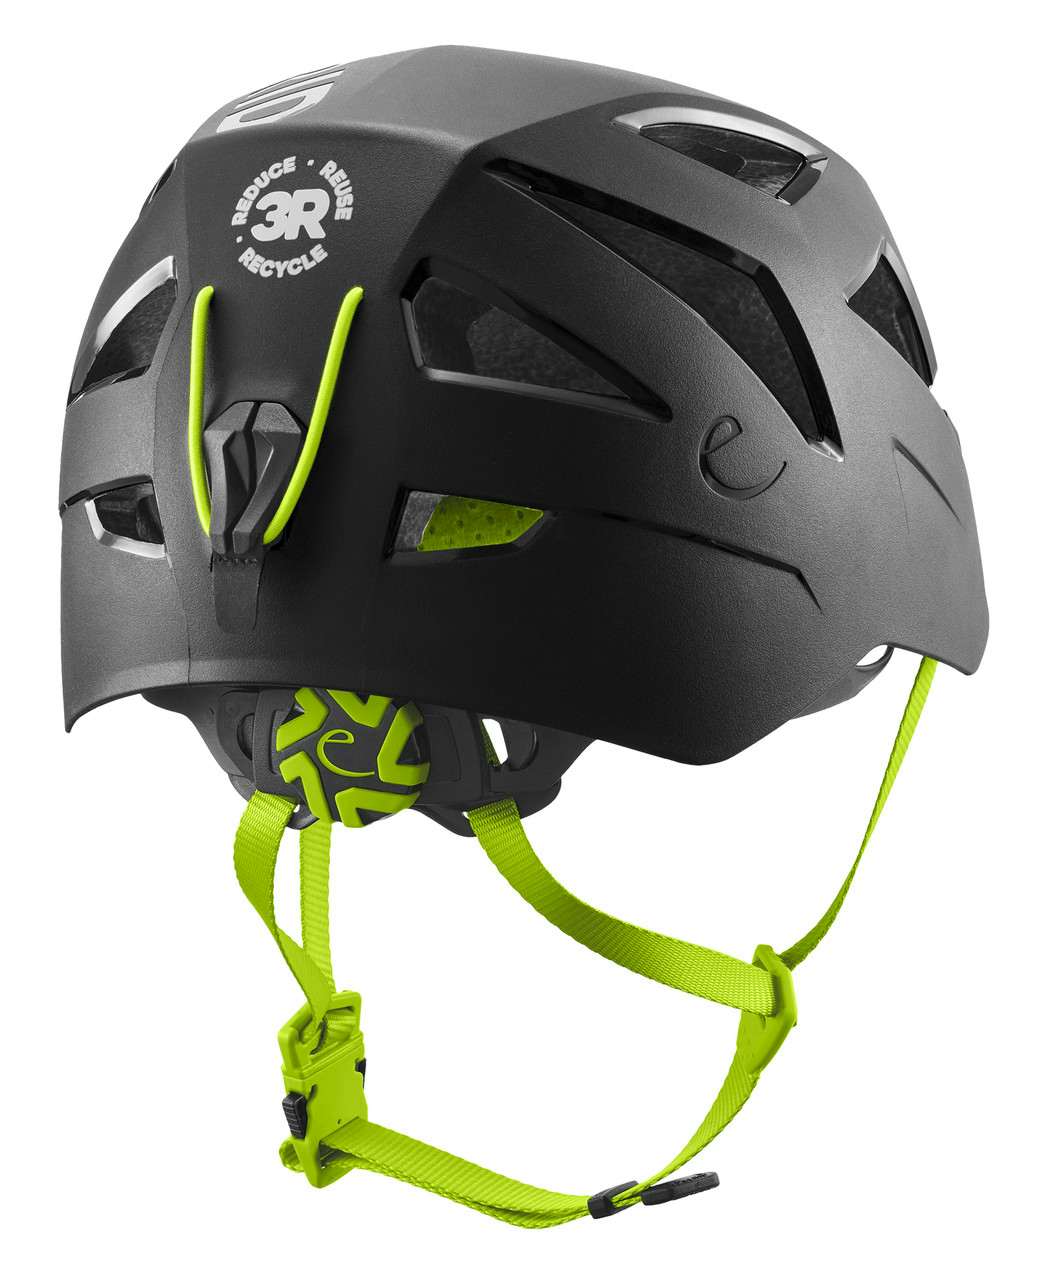 Zodiac 3R Helmet Night